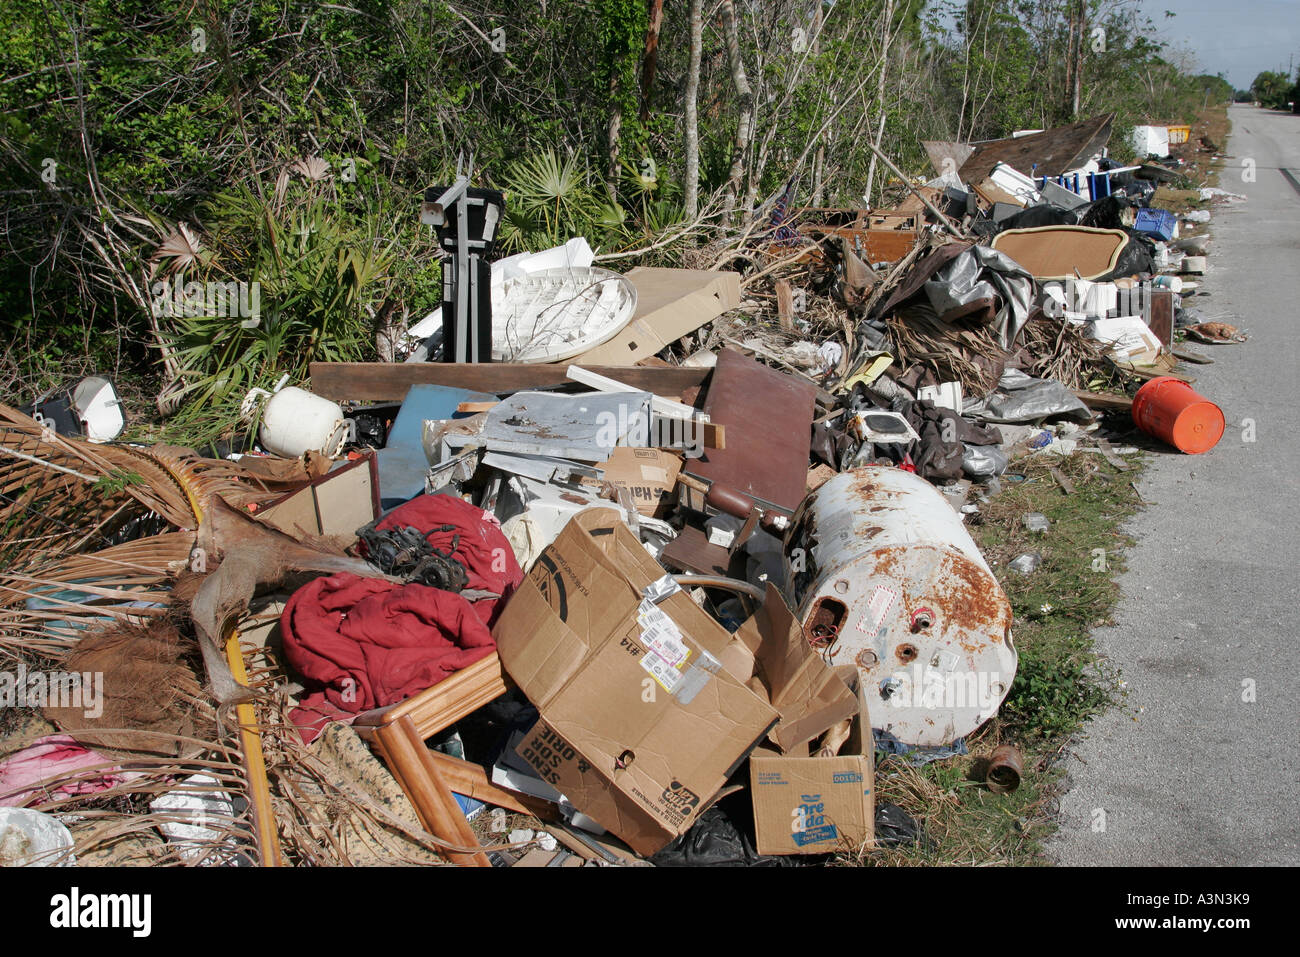 Miami Florida,Homestead,illegal dumping site,roadside,tires,appliances,trash,pollution,litter,trash,pollution,clutter,trash,FL060130446 Stock Photo